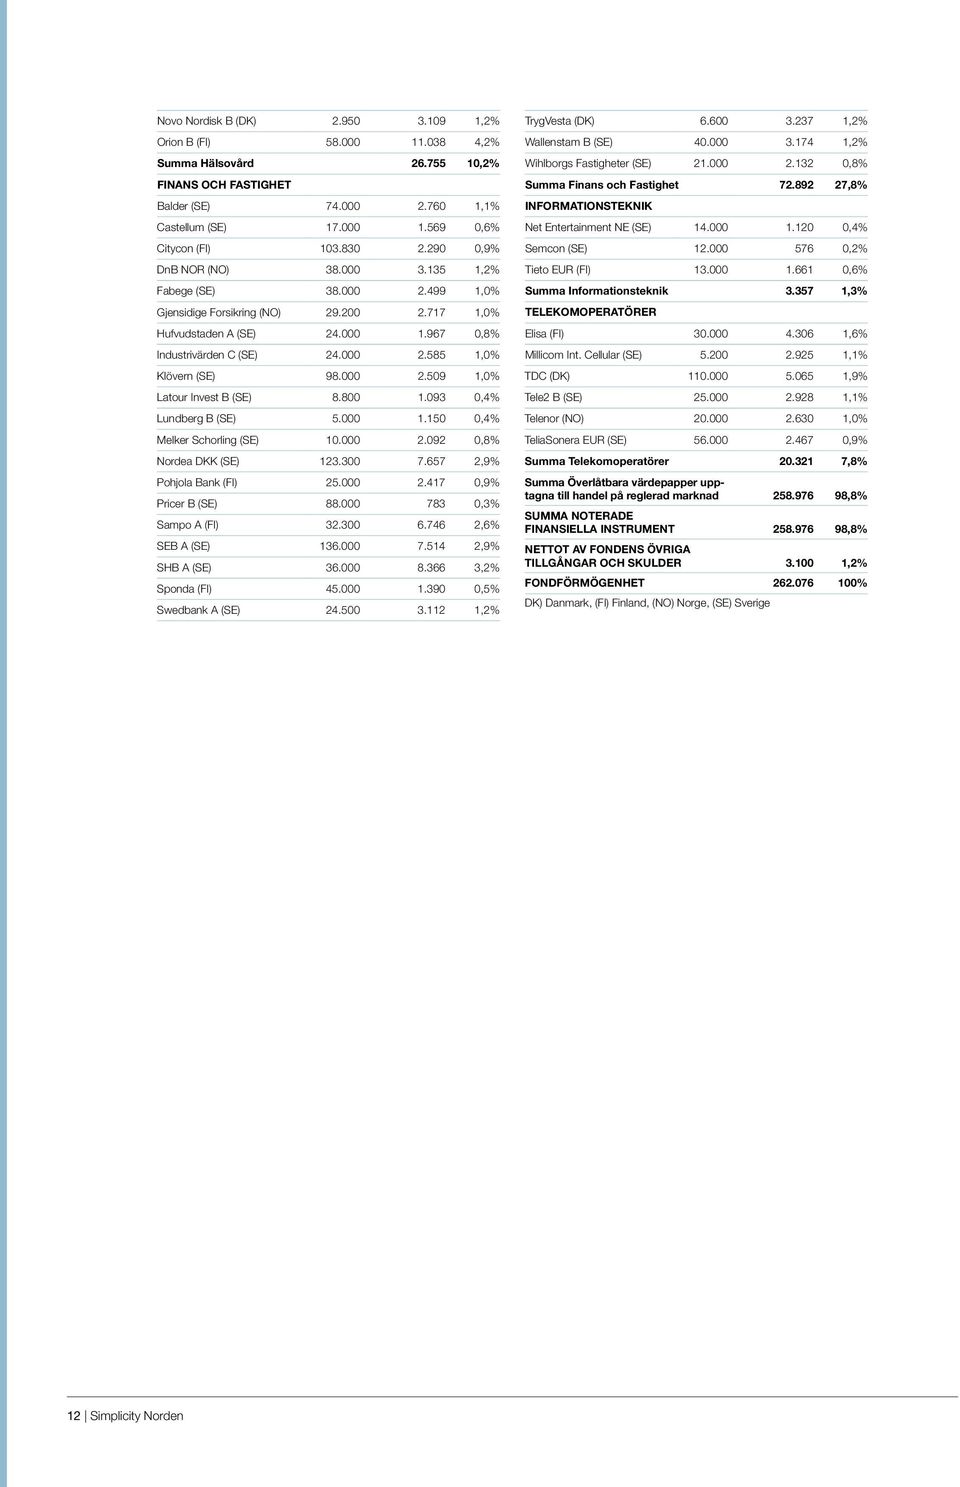 000 2.509 1,0% Latour Invest B (SE) 8.800 1.093 0,4% Lundberg B (SE) 5.000 1.150 0,4% Melker Schorling (SE) 10.000 2.092 0,8% Nordea DKK (SE) 123.300 7.657 2,9% Pohjola Bank (FI) 25.000 2.417 0,9% Pricer B (SE) 88.